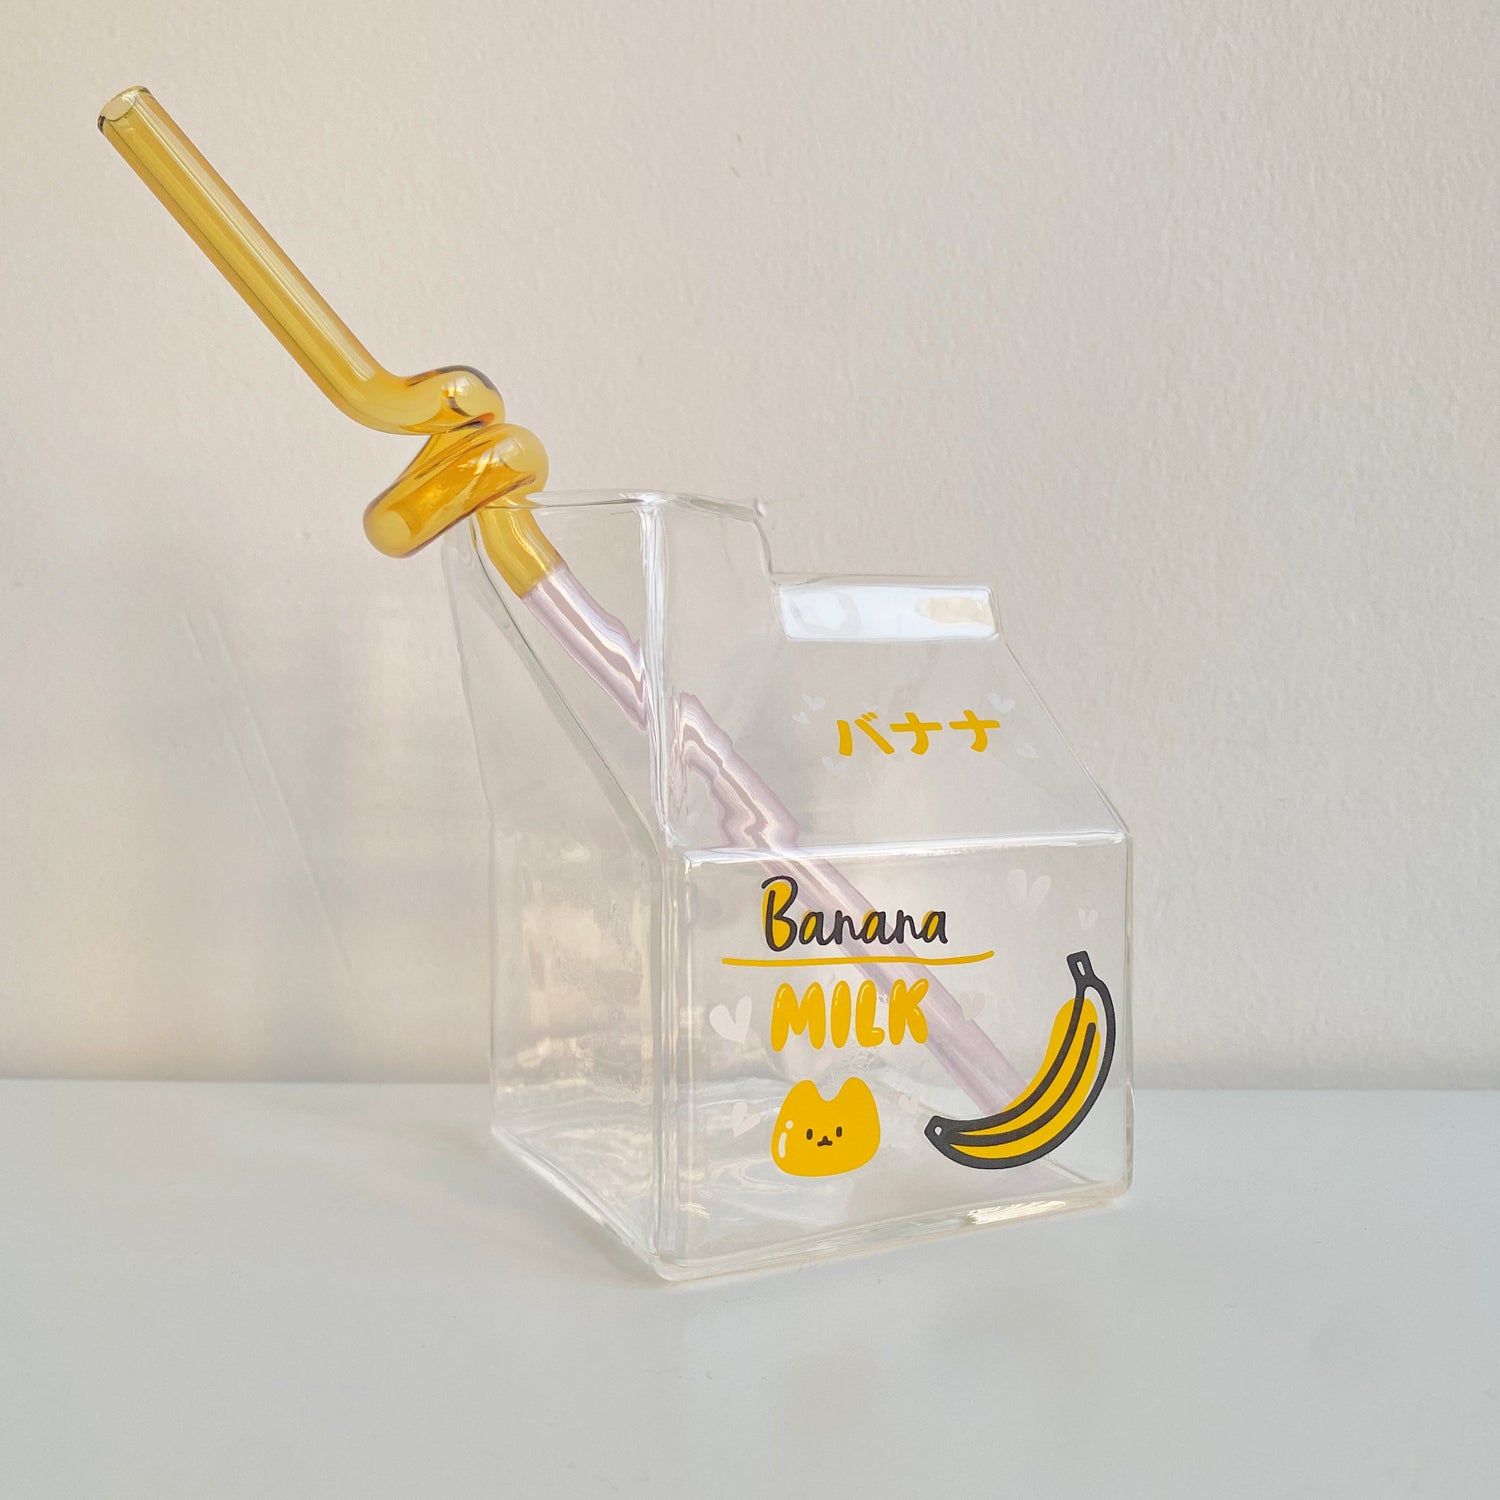 glass milk carton with cute banana design